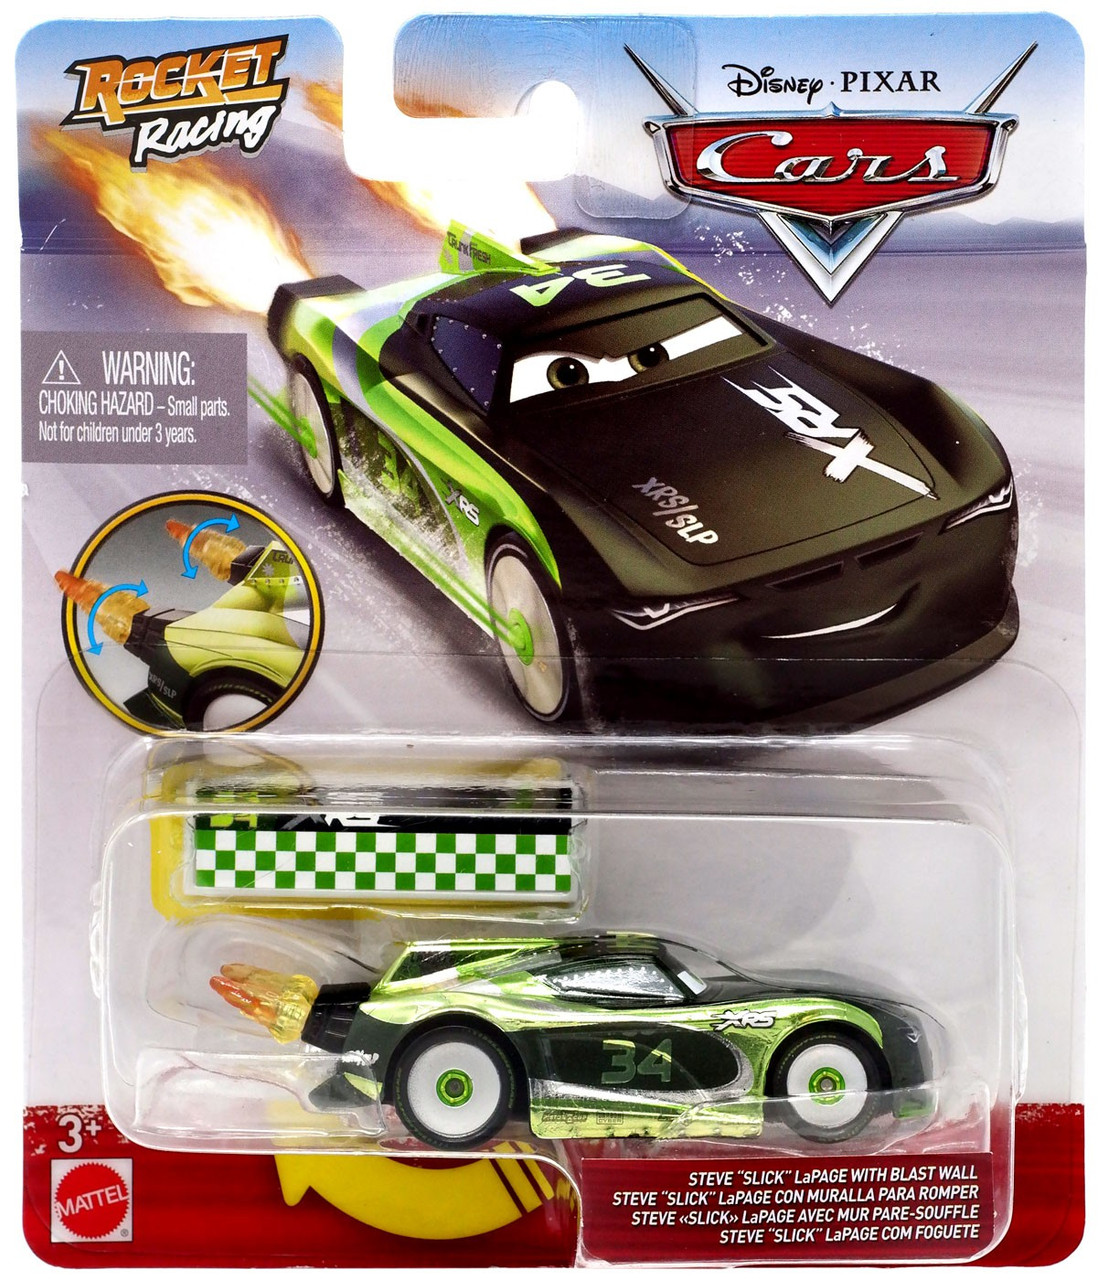 Disney Pixar Cars Cars 3 Rocket Racing Steve Slick Lapage With Blast Wall 155 Diecast Car Mattel Toys Toywiz - cars 3 full movie game roblox cars 3 lego cars 3 cars movie cars 3 crash cars for kids